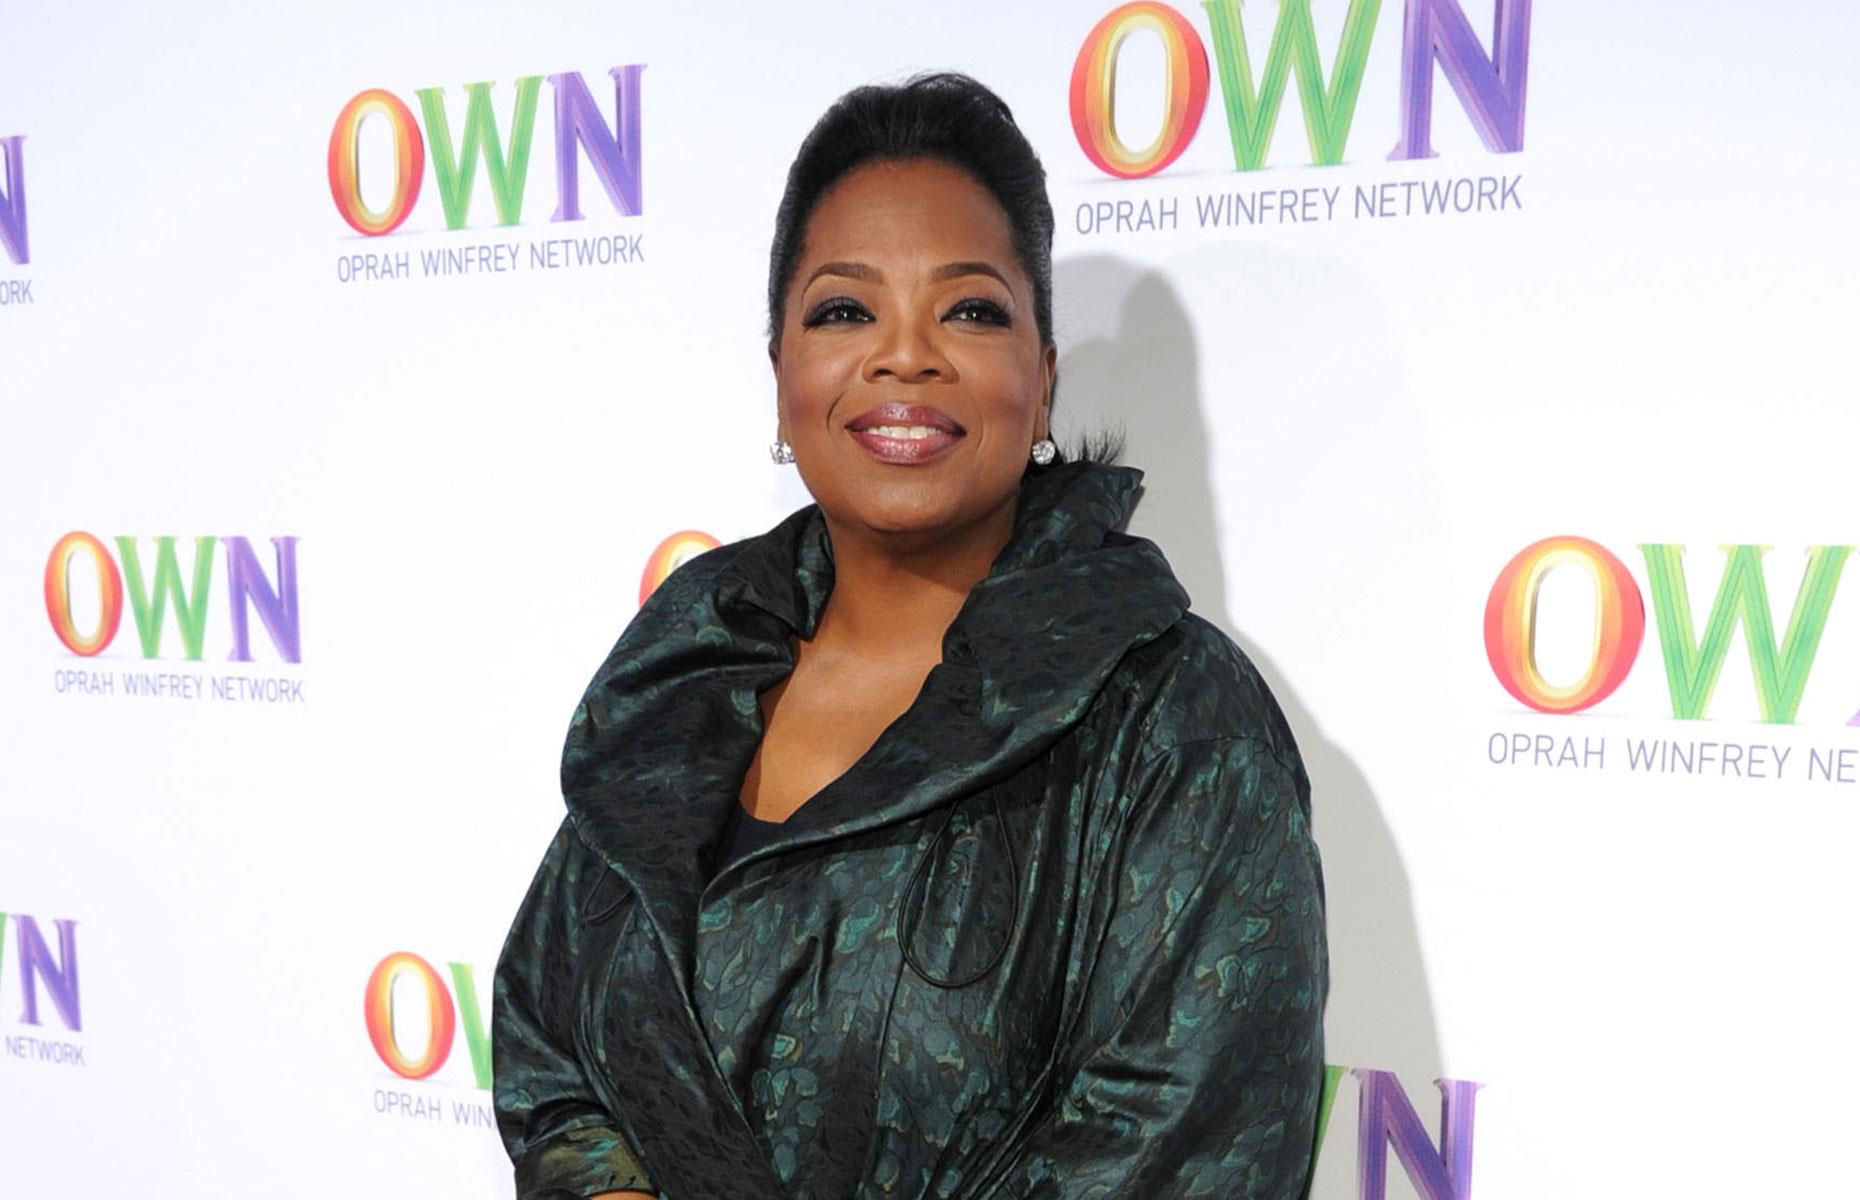 Oprah Winfrey's launch flop